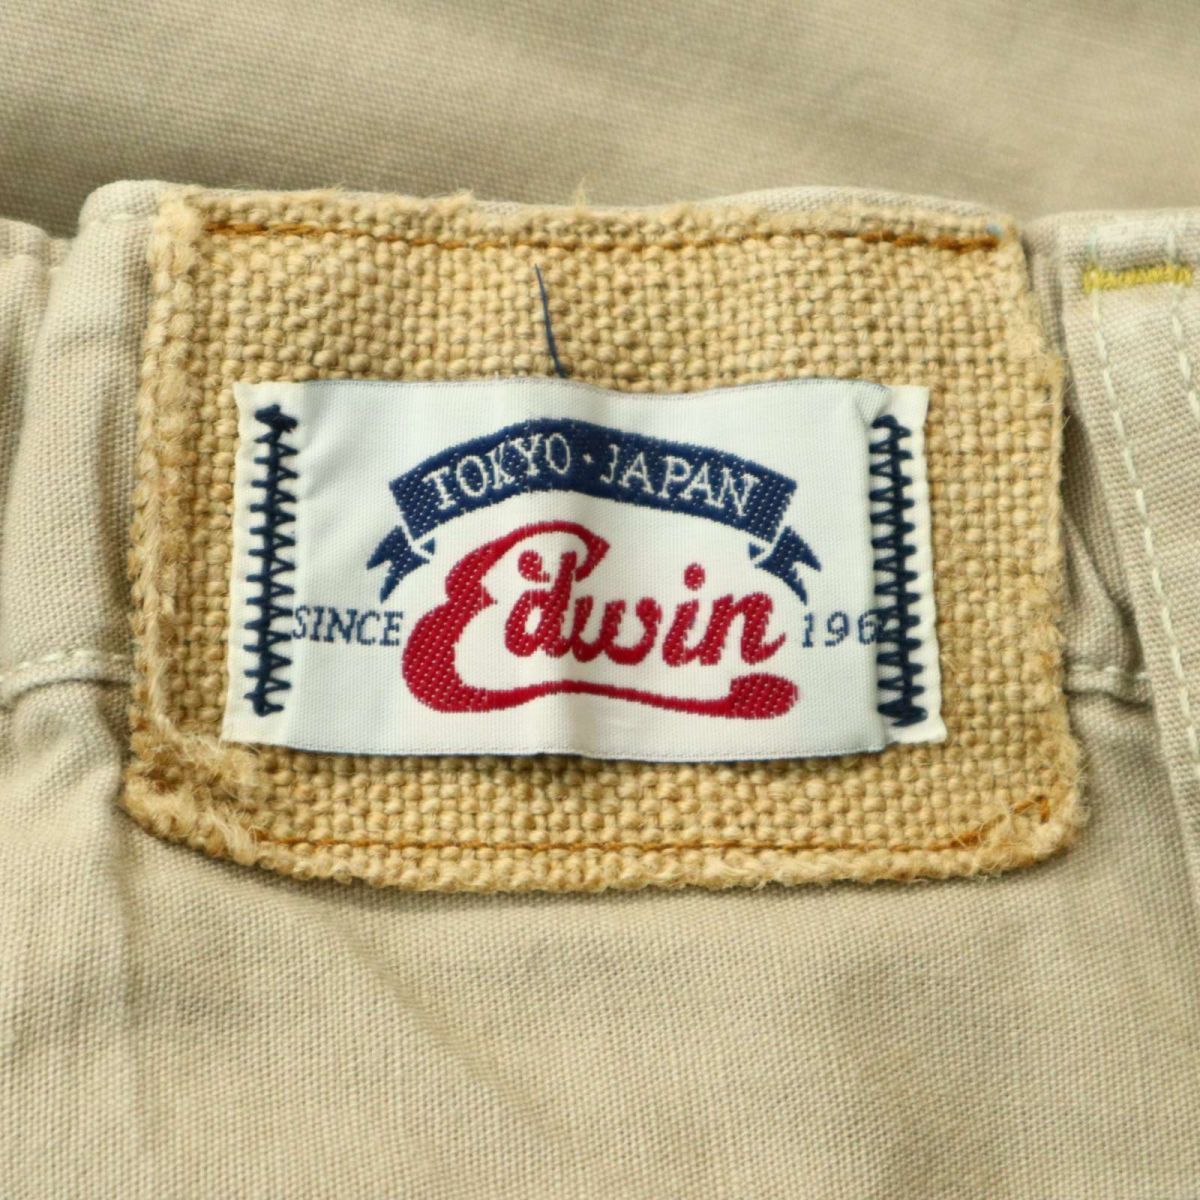  прекрасный товар * EDWIN Edwin 711RS весна лето лен linen. стрейч легкий брюки Sz.M мужской сделано в Японии A4B00747_2#R